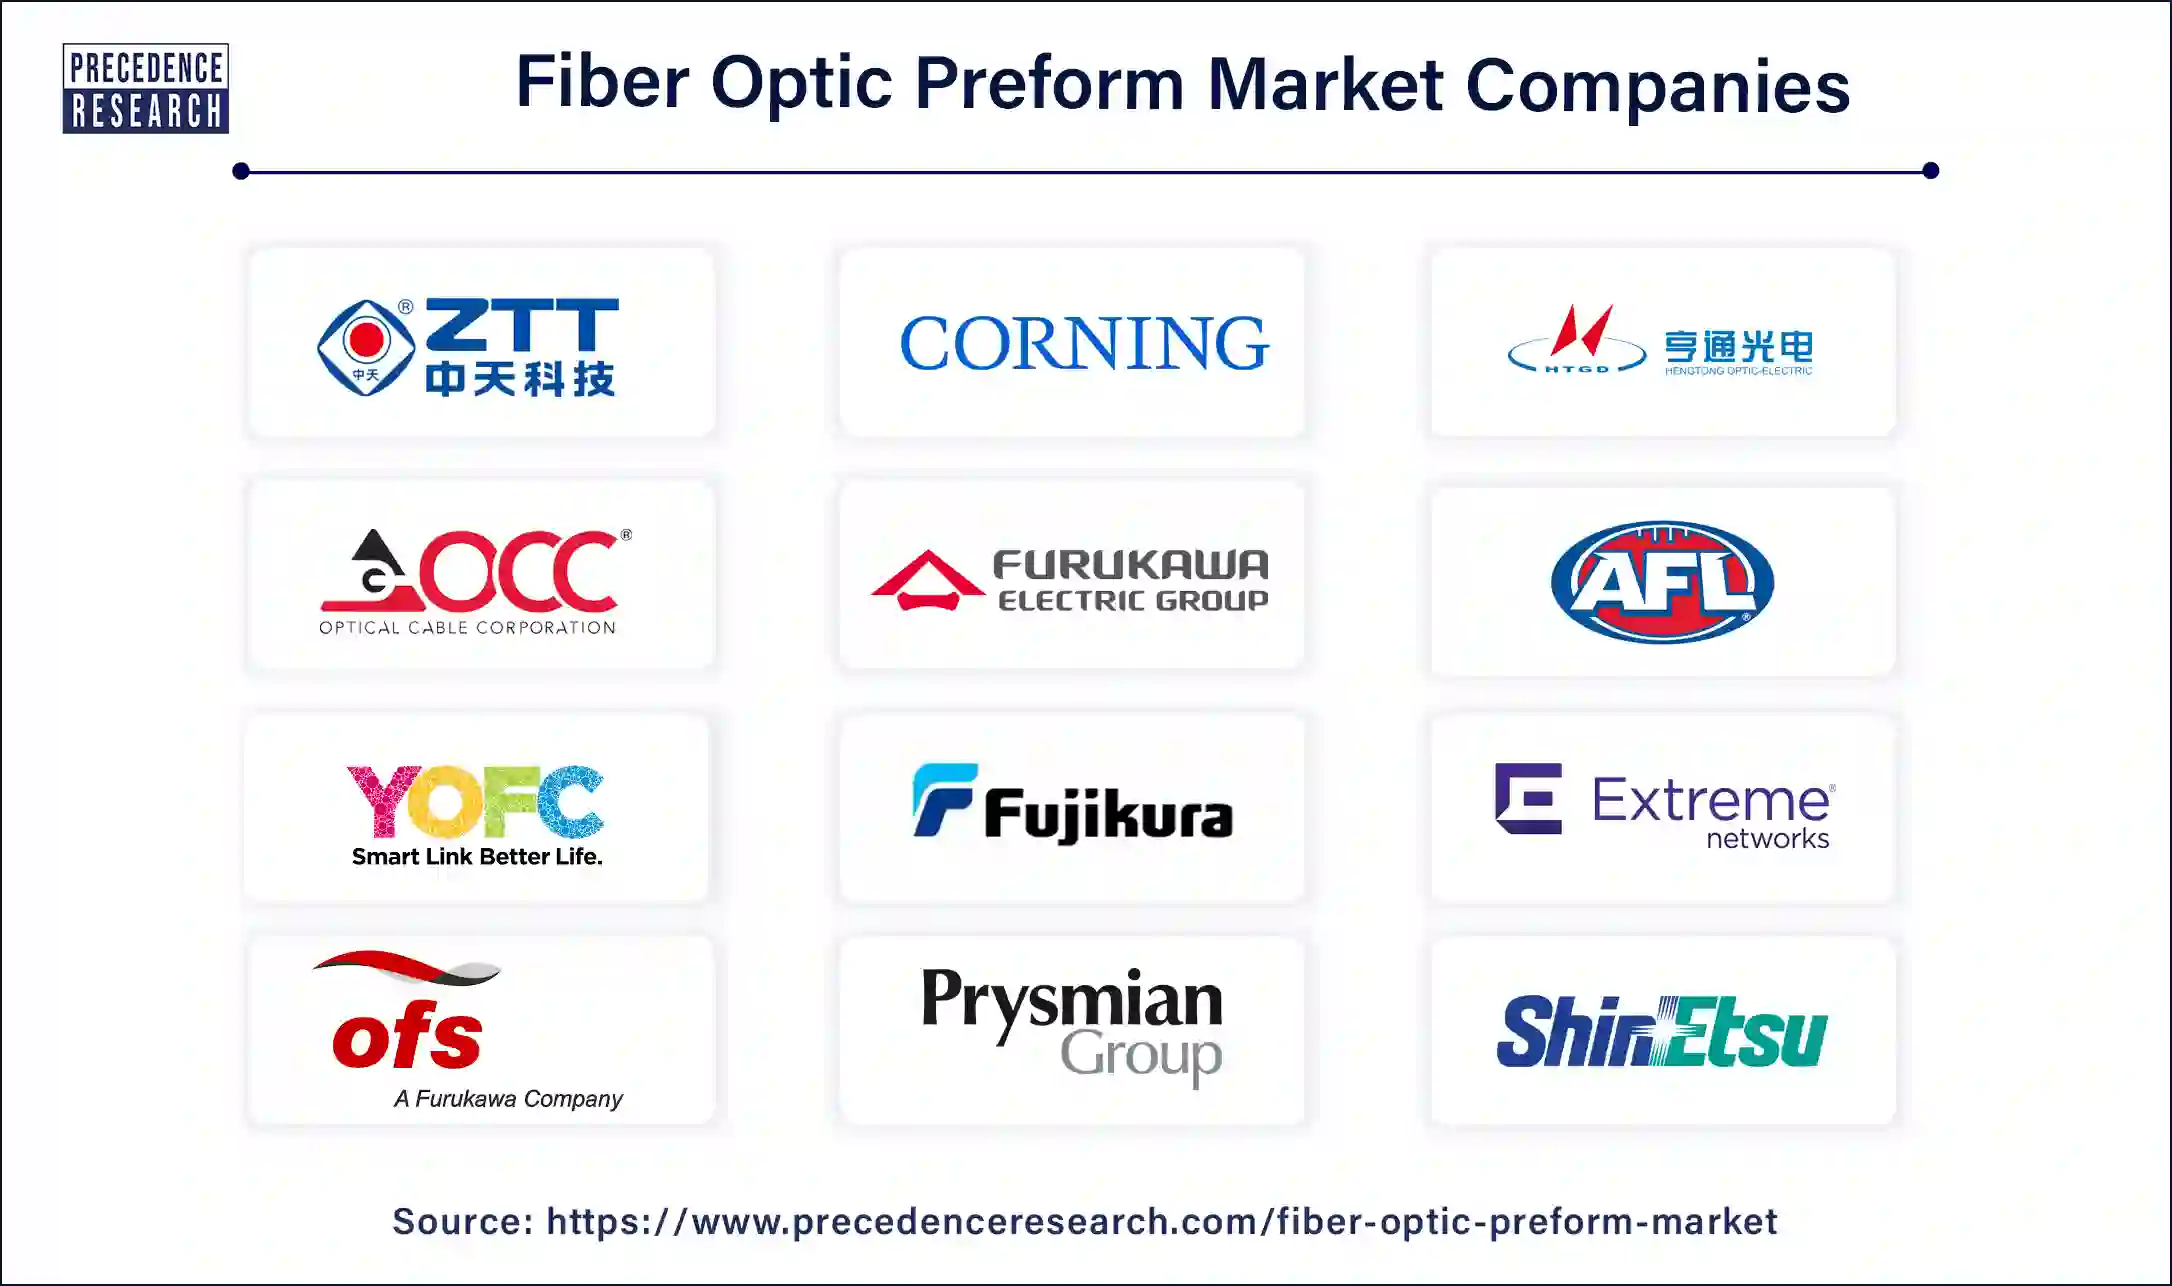 Fiber Optic Preform Companies